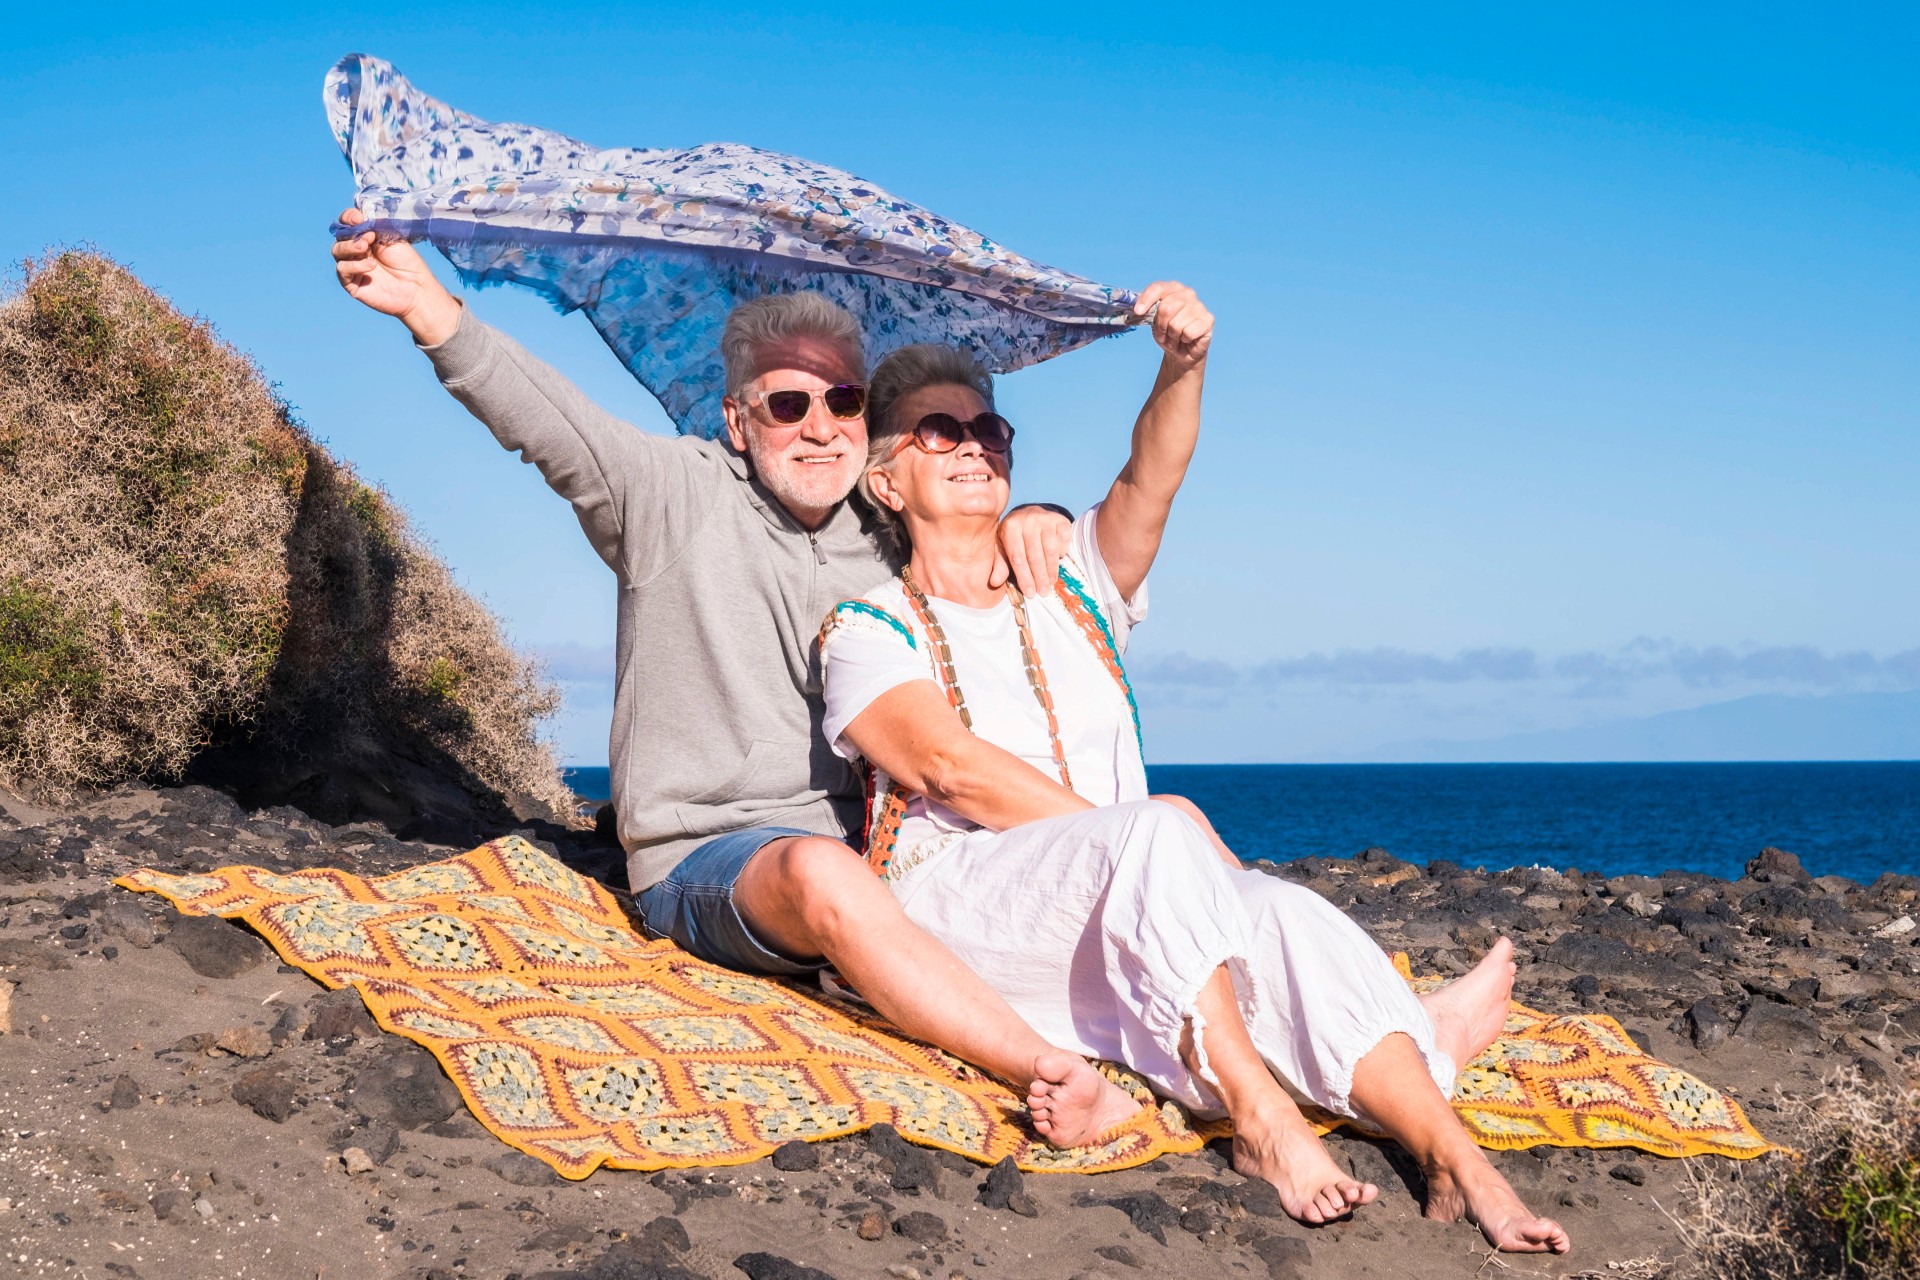 Senior couple enjoying the beach.